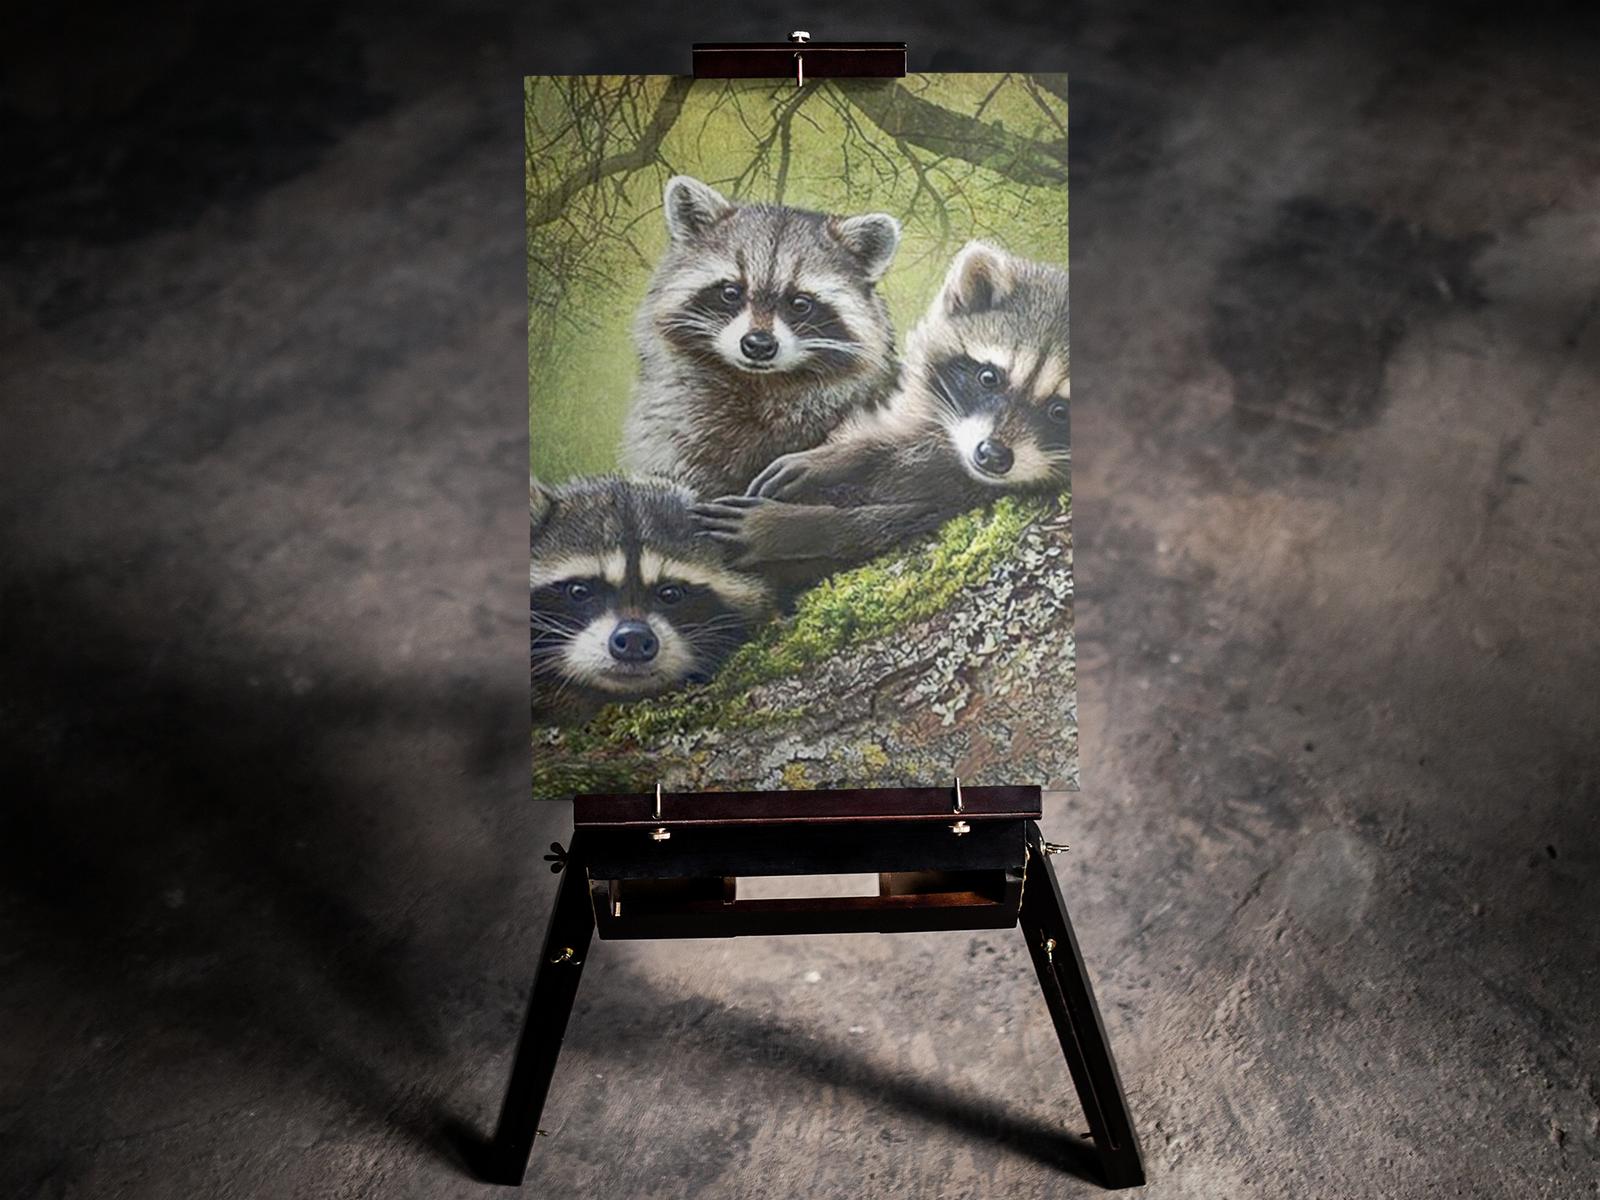 Raccoon Family 5D Diamond Art Kit